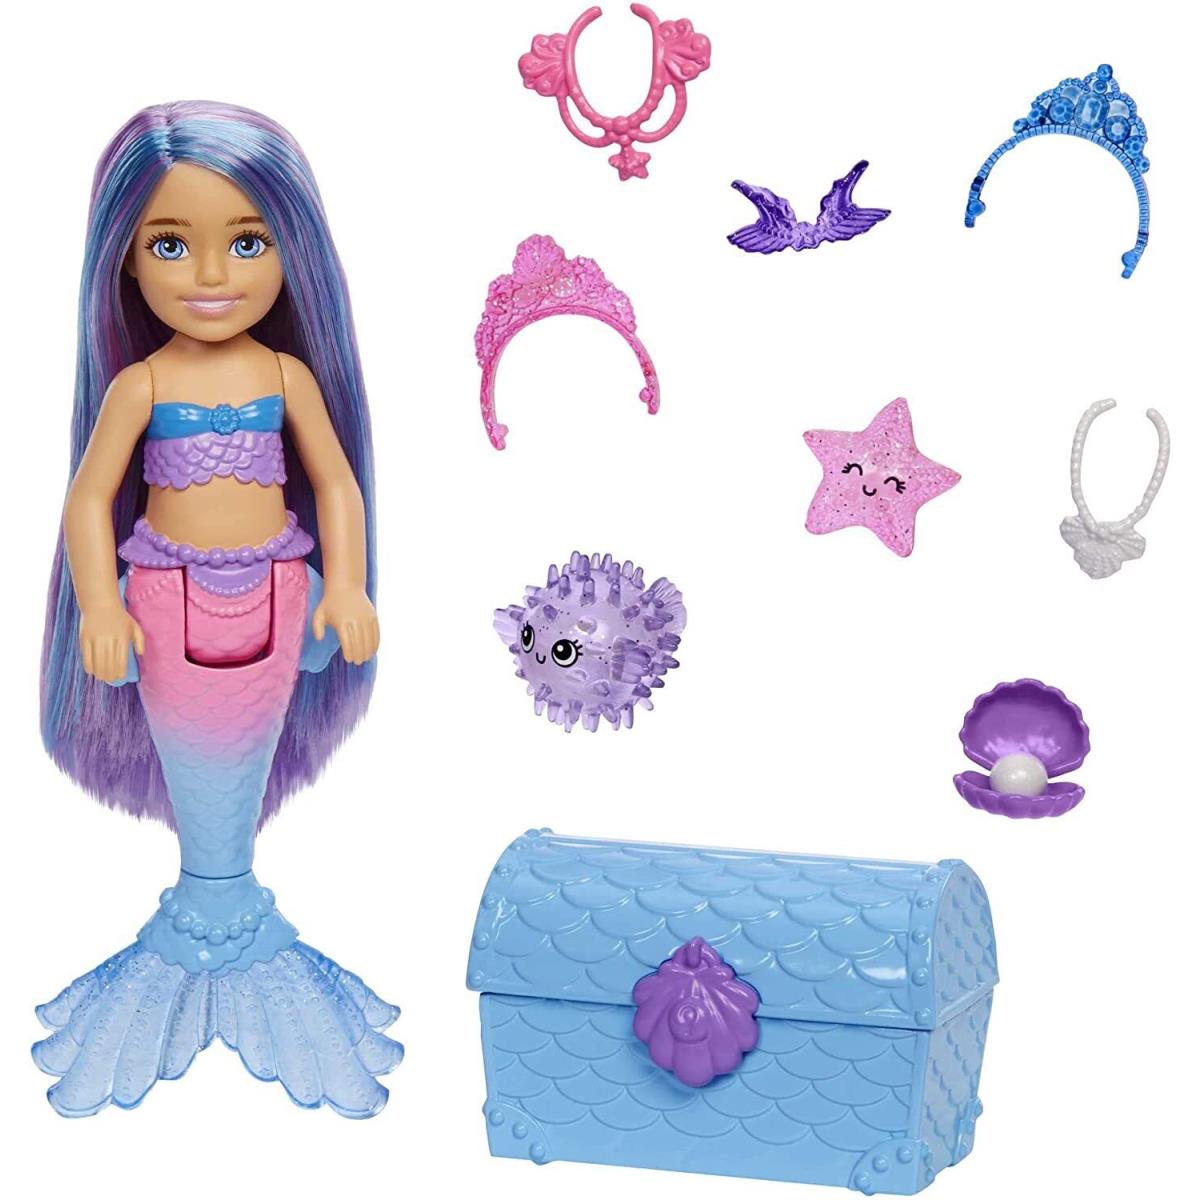 Barbie Dreamtopia Mermaid Doll Choose Rainbow Sparkle Lights Color Magic More Mermaid Power Chelsea Purple Blue Hair Chest Pets